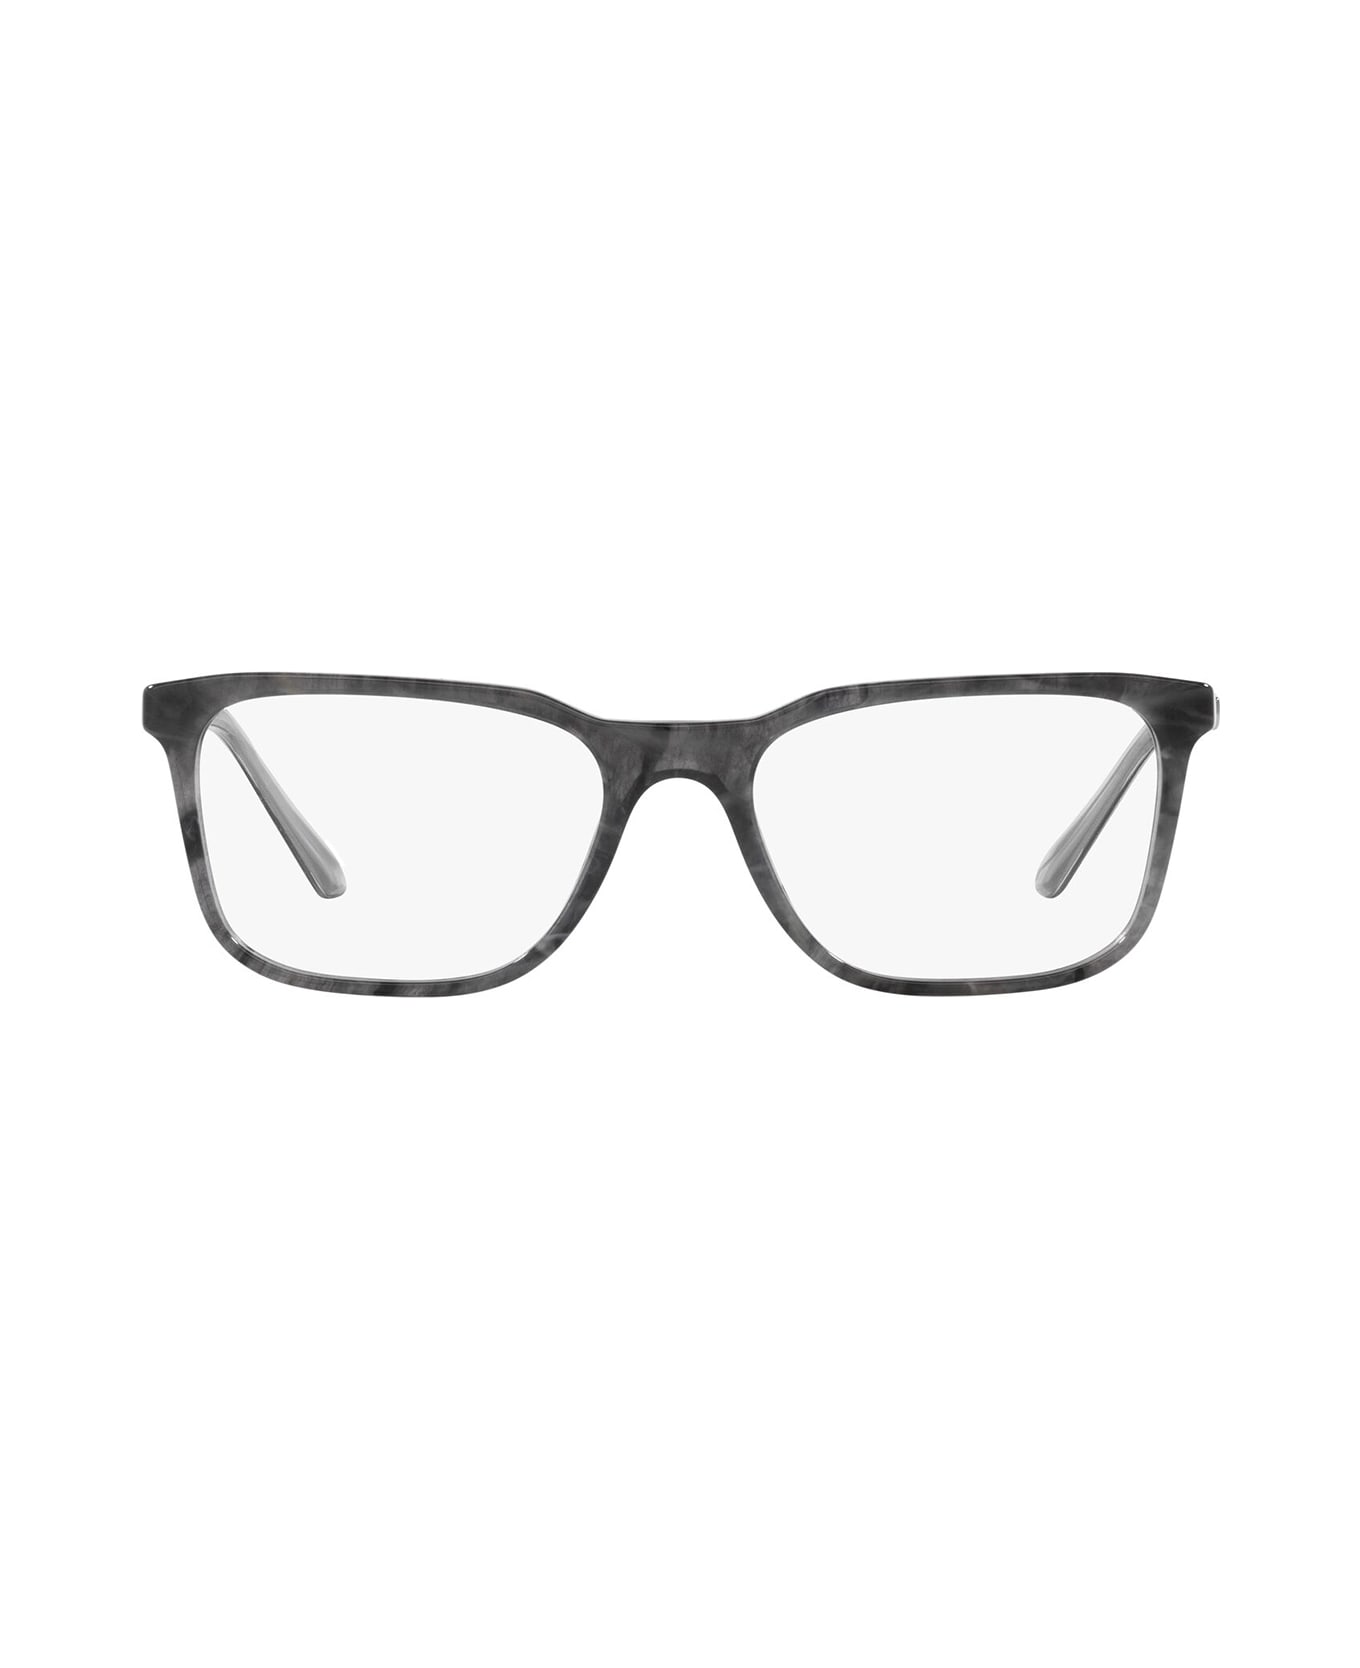 Prada Eyewear Pr 05zv Graphite Stone Glasses - Graphite Stone